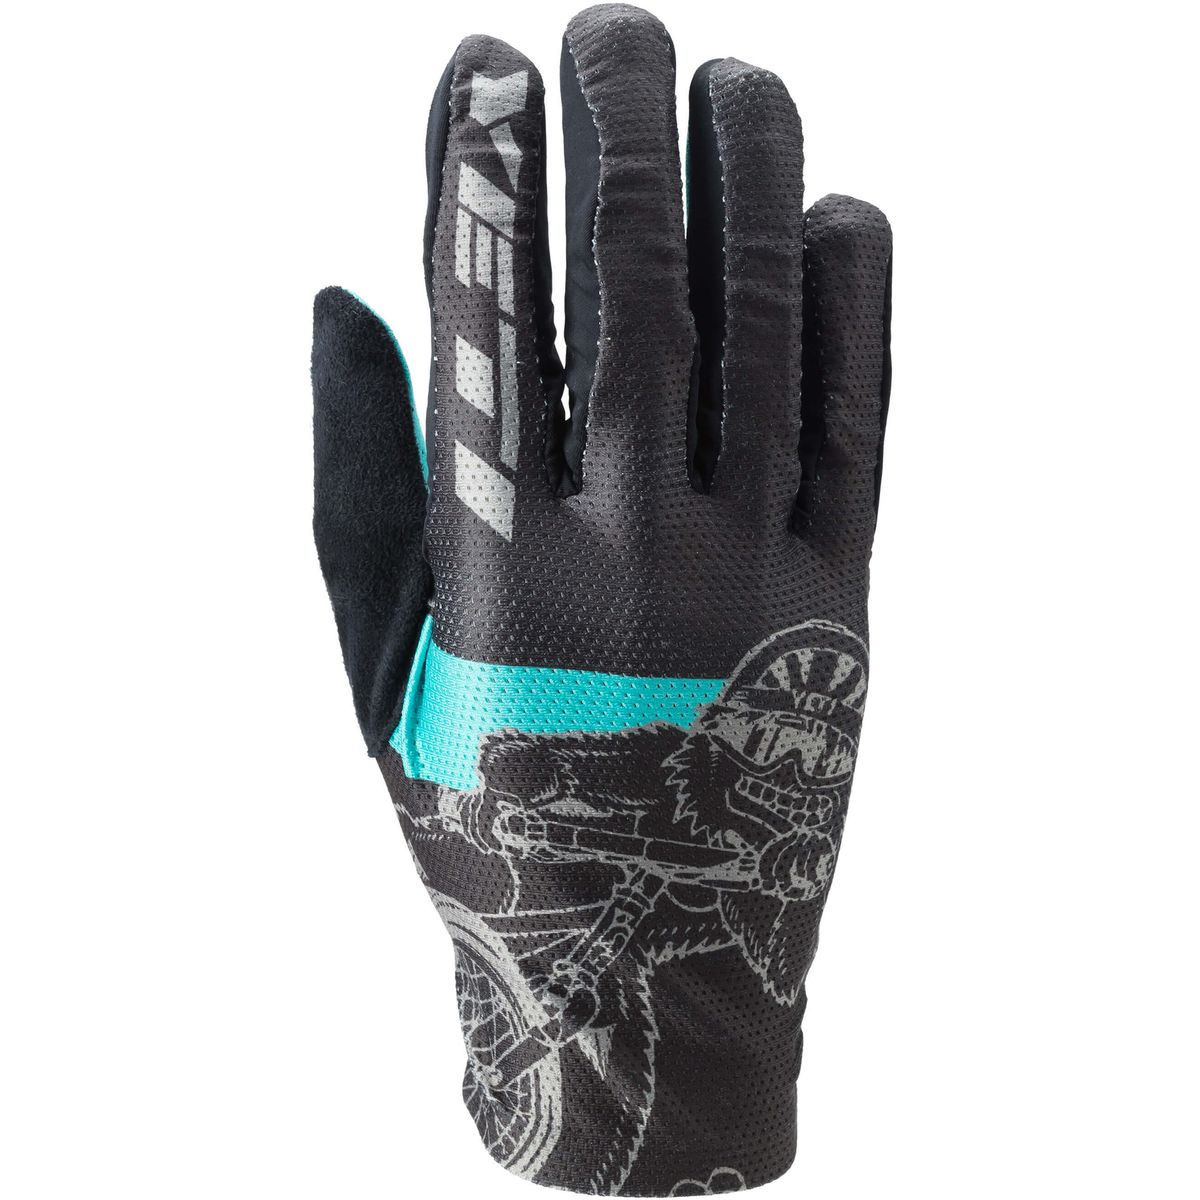 Yeti Cycles Enduro Glove - Men's